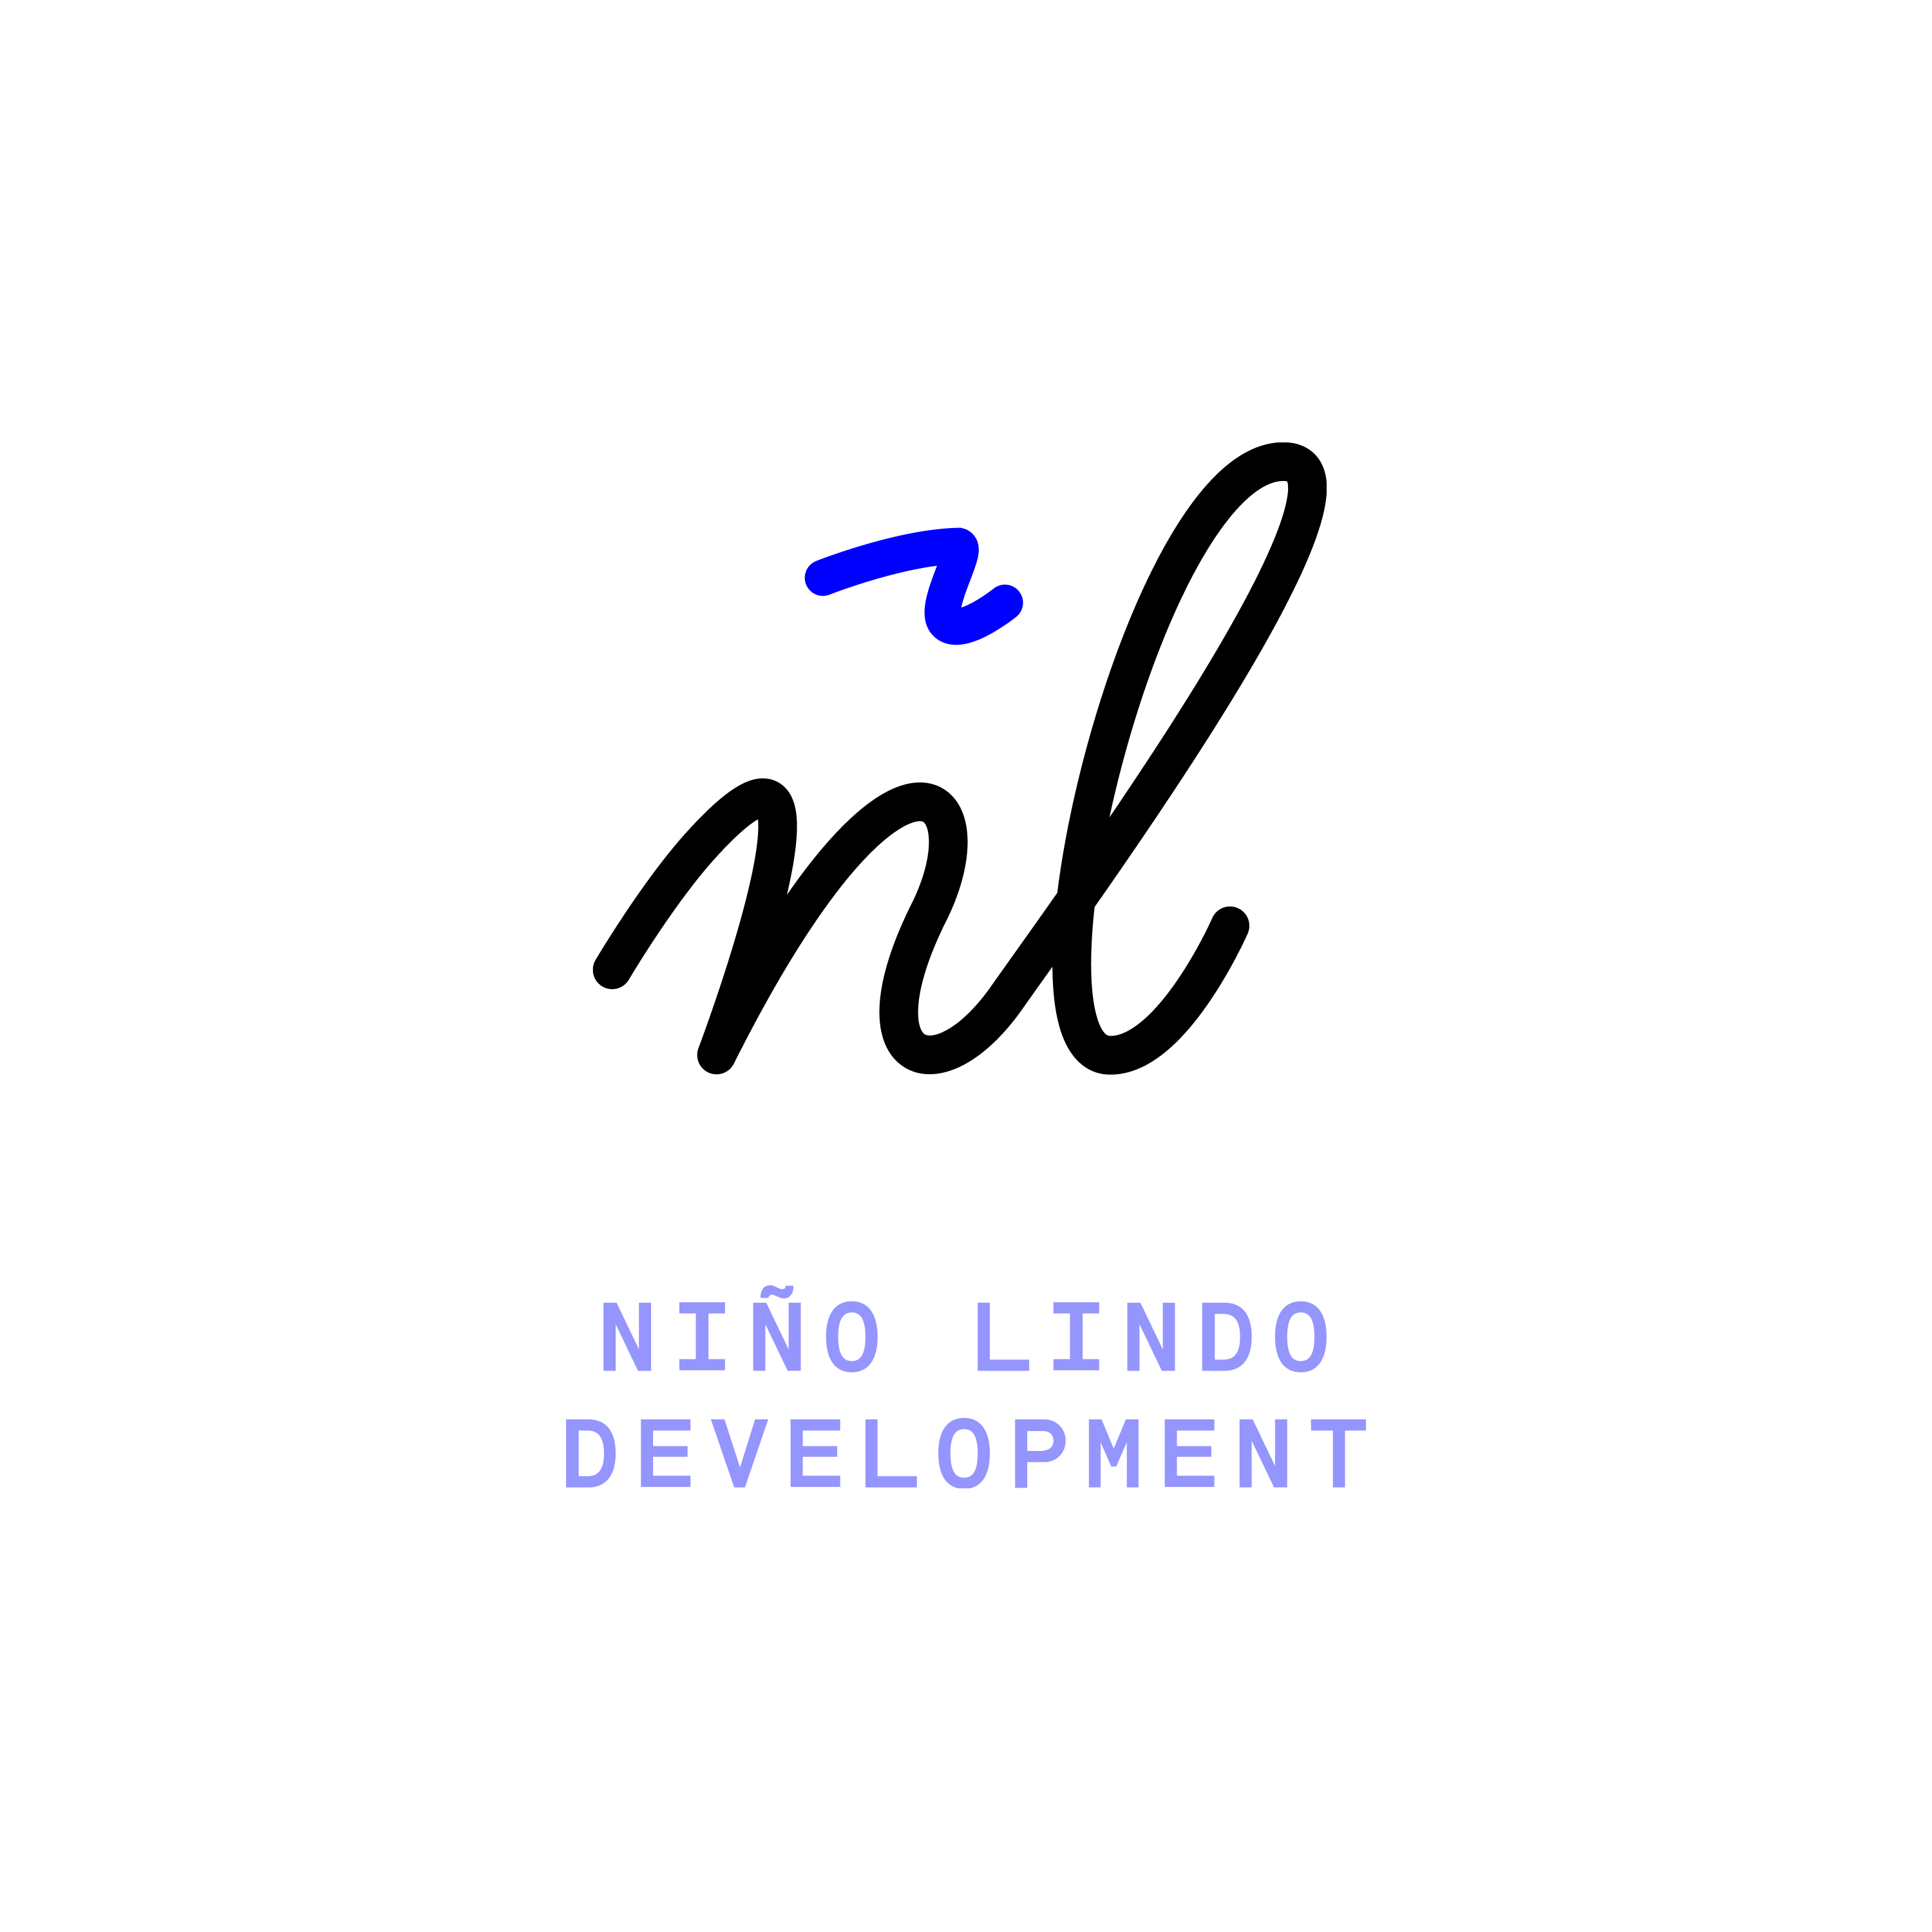 Niño Lindo Development logo